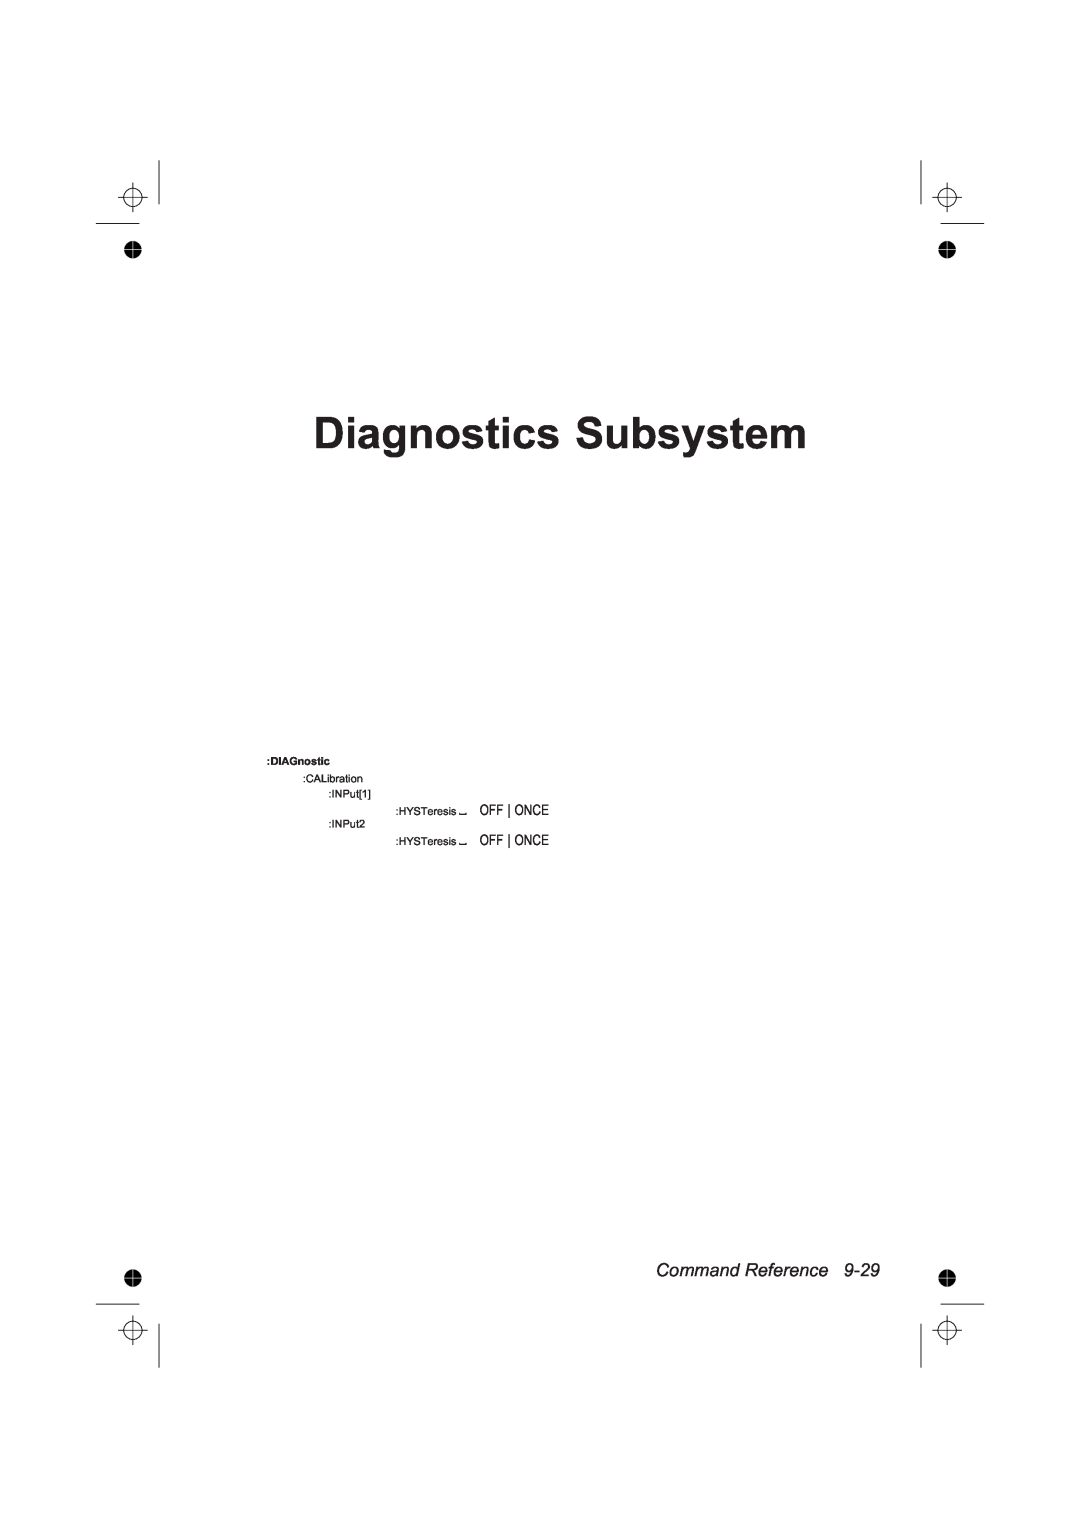 Fluke PM6681R, PM6685R manual Diagnostics Subsystem, Command Reference, DIAGnostic 